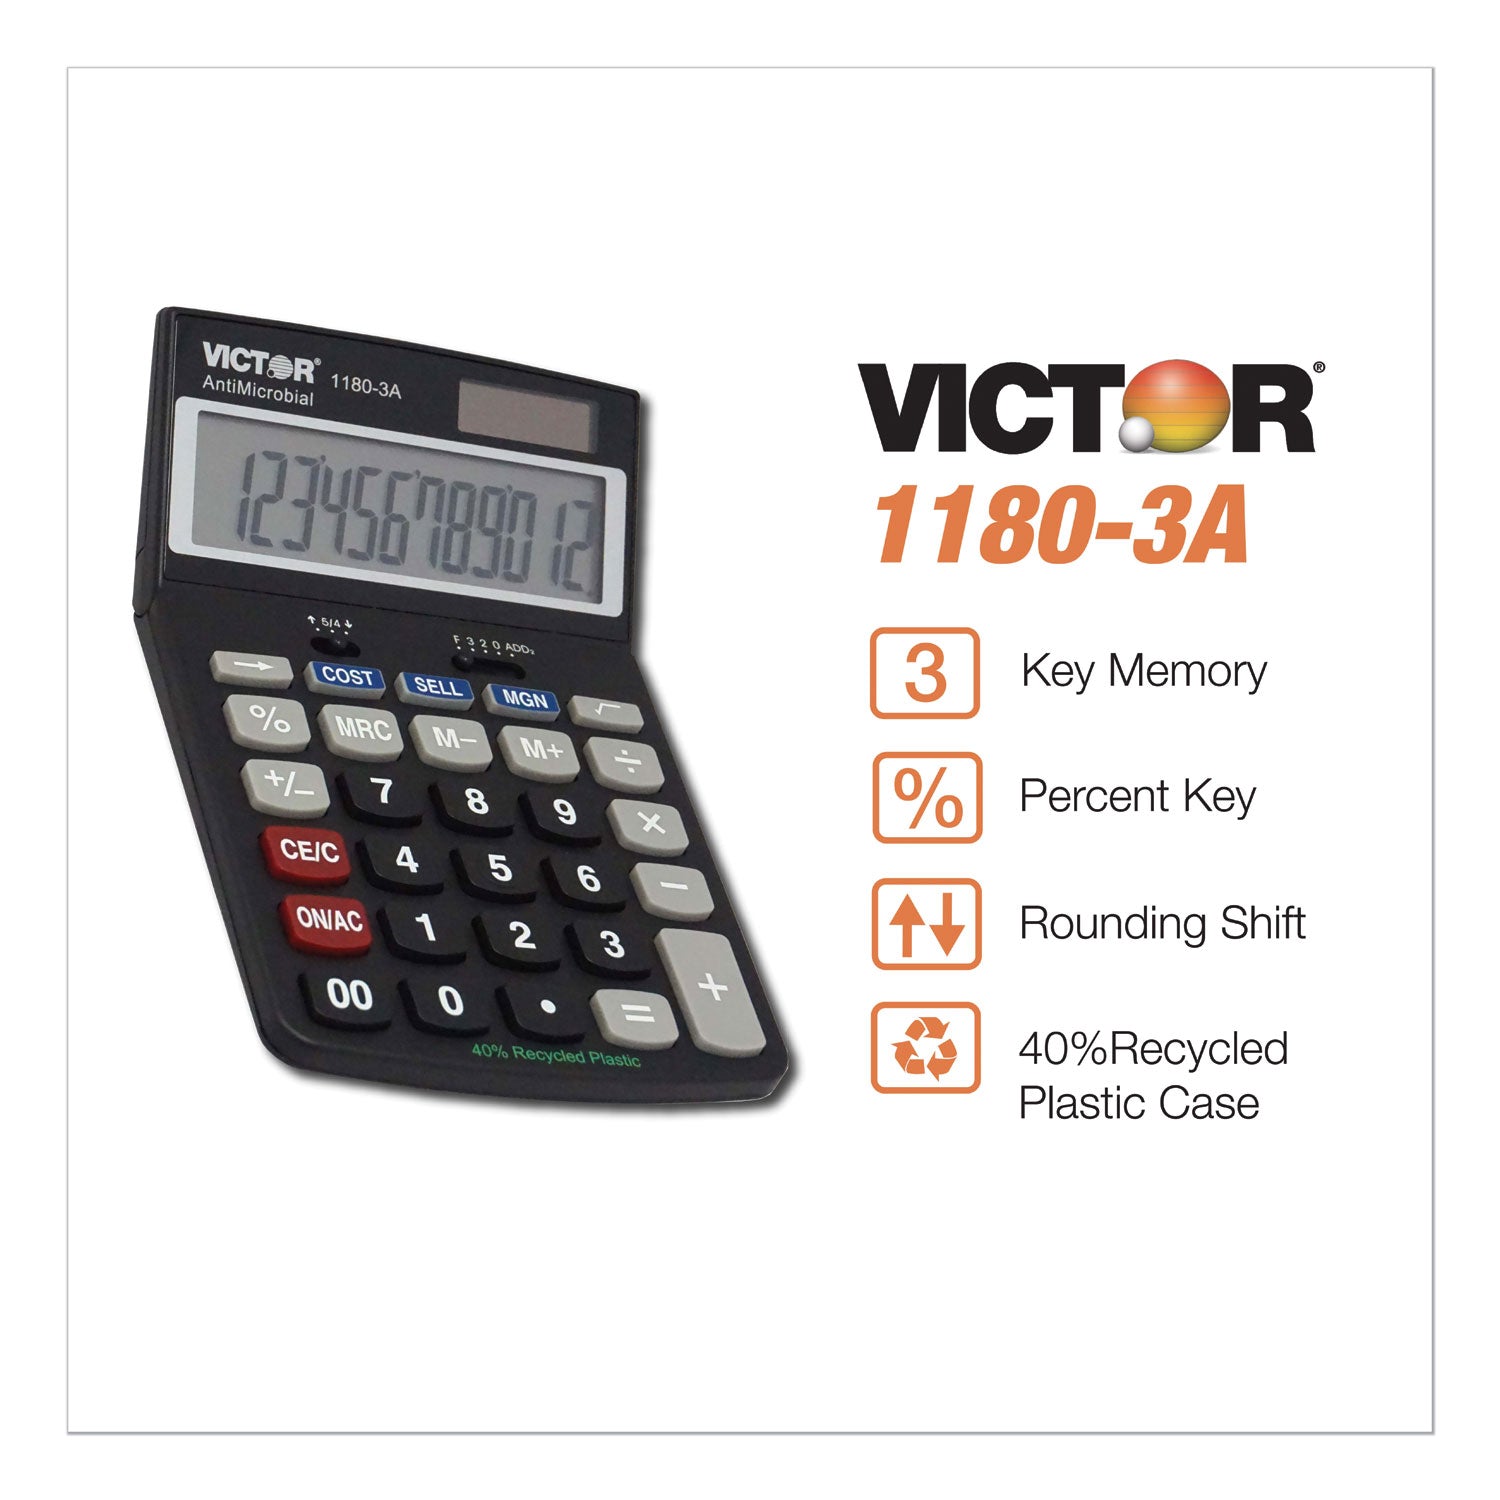 1180-3A Antimicrobial Desktop Calculator, 12-Digit LCD - 